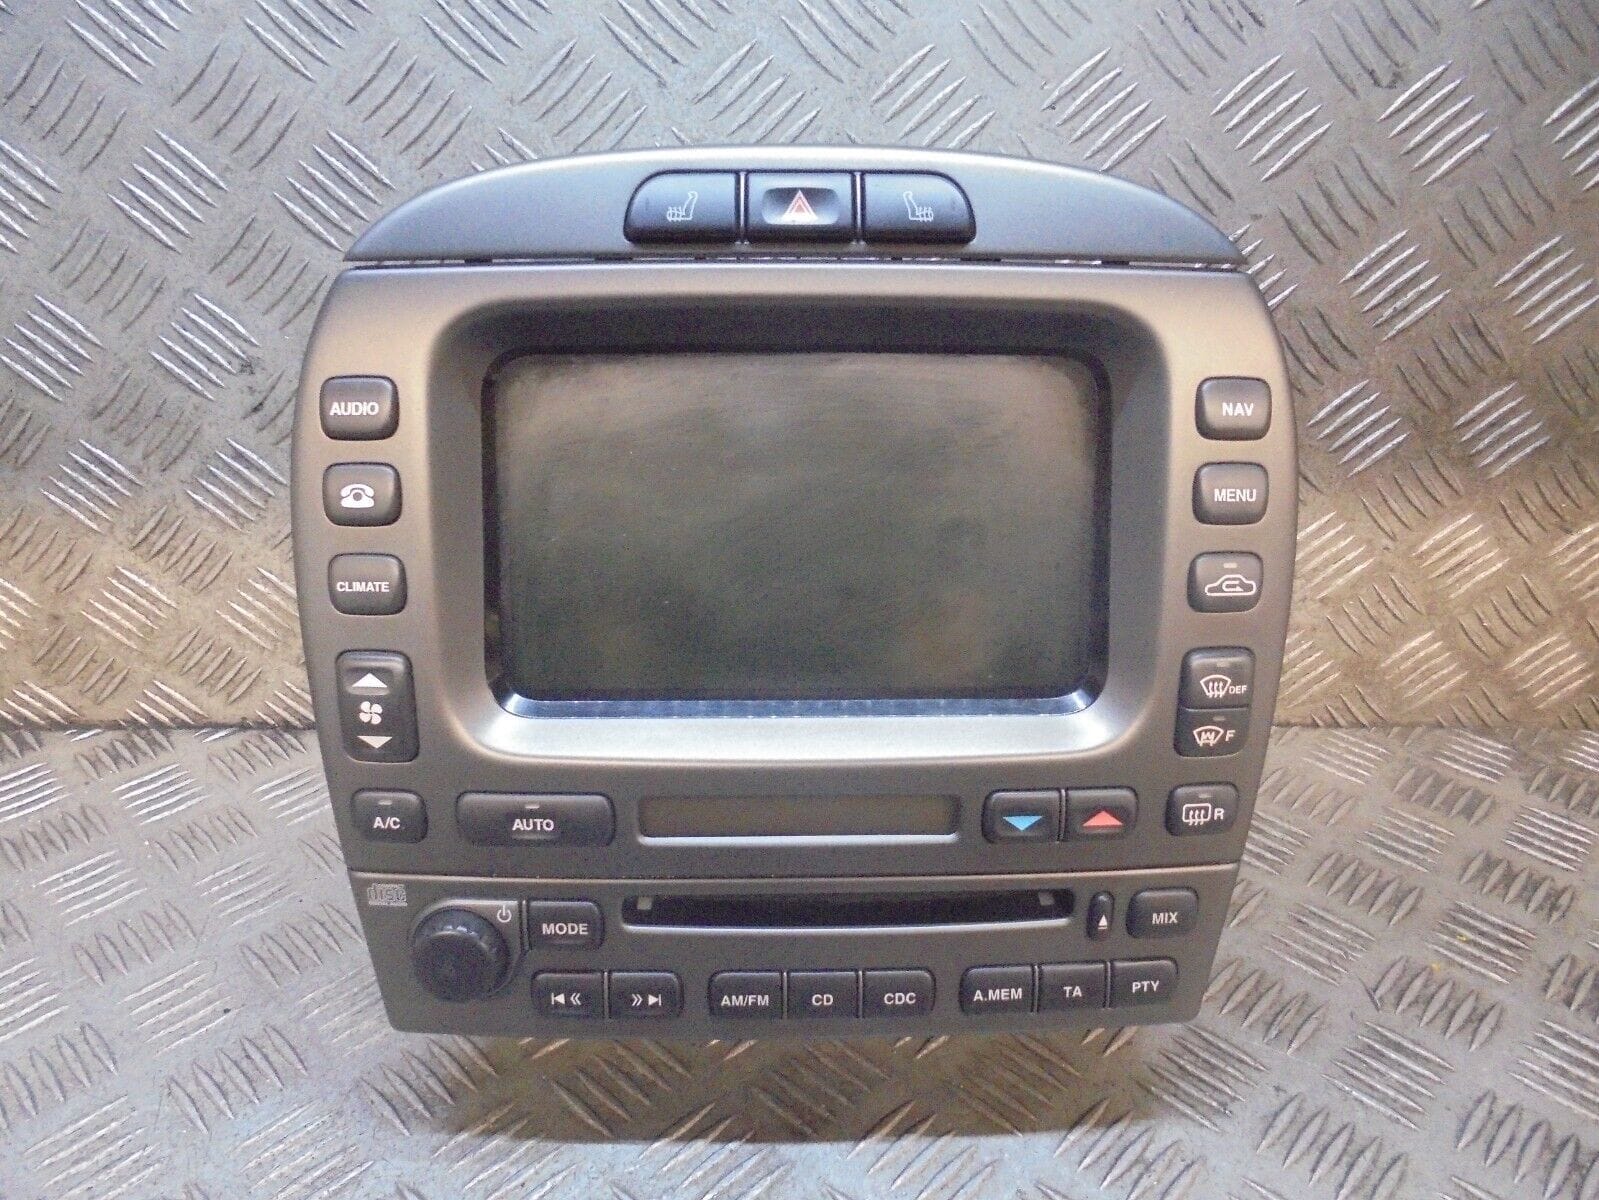 Audio Video/Electronics - WTB 04-08 X-Type (x400) NAV screen with heated windshield - New or Used - 2004 to 2008 Jaguar X-Type - Atlanta, GA 30339, United States